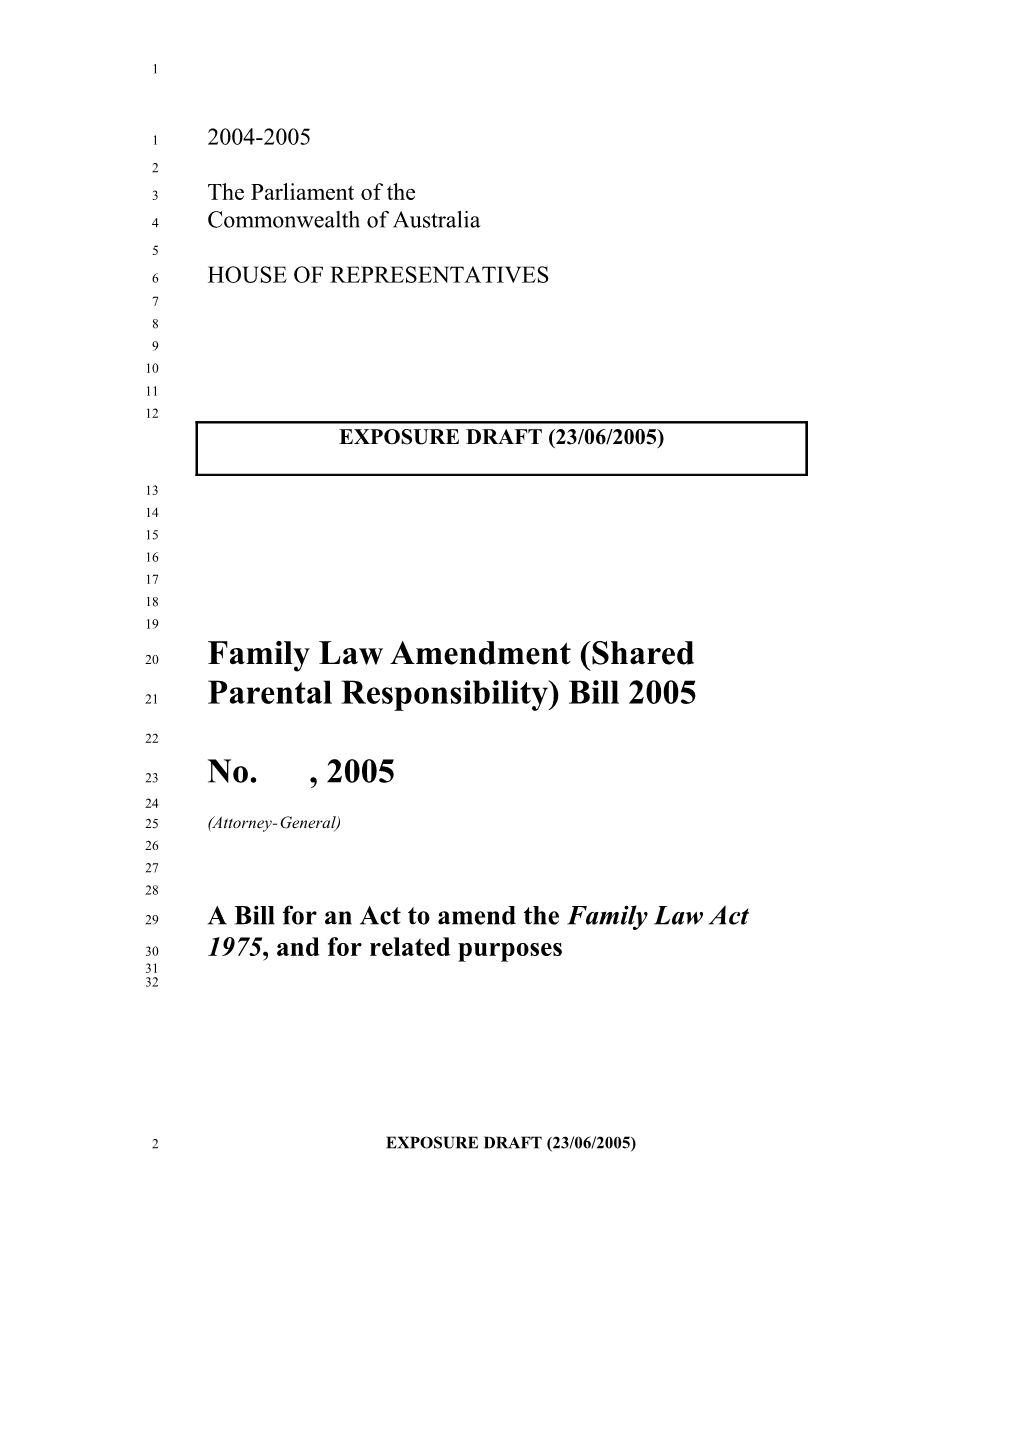 Family Law Amendment (Shared Parental Responsibility) Bill 2005